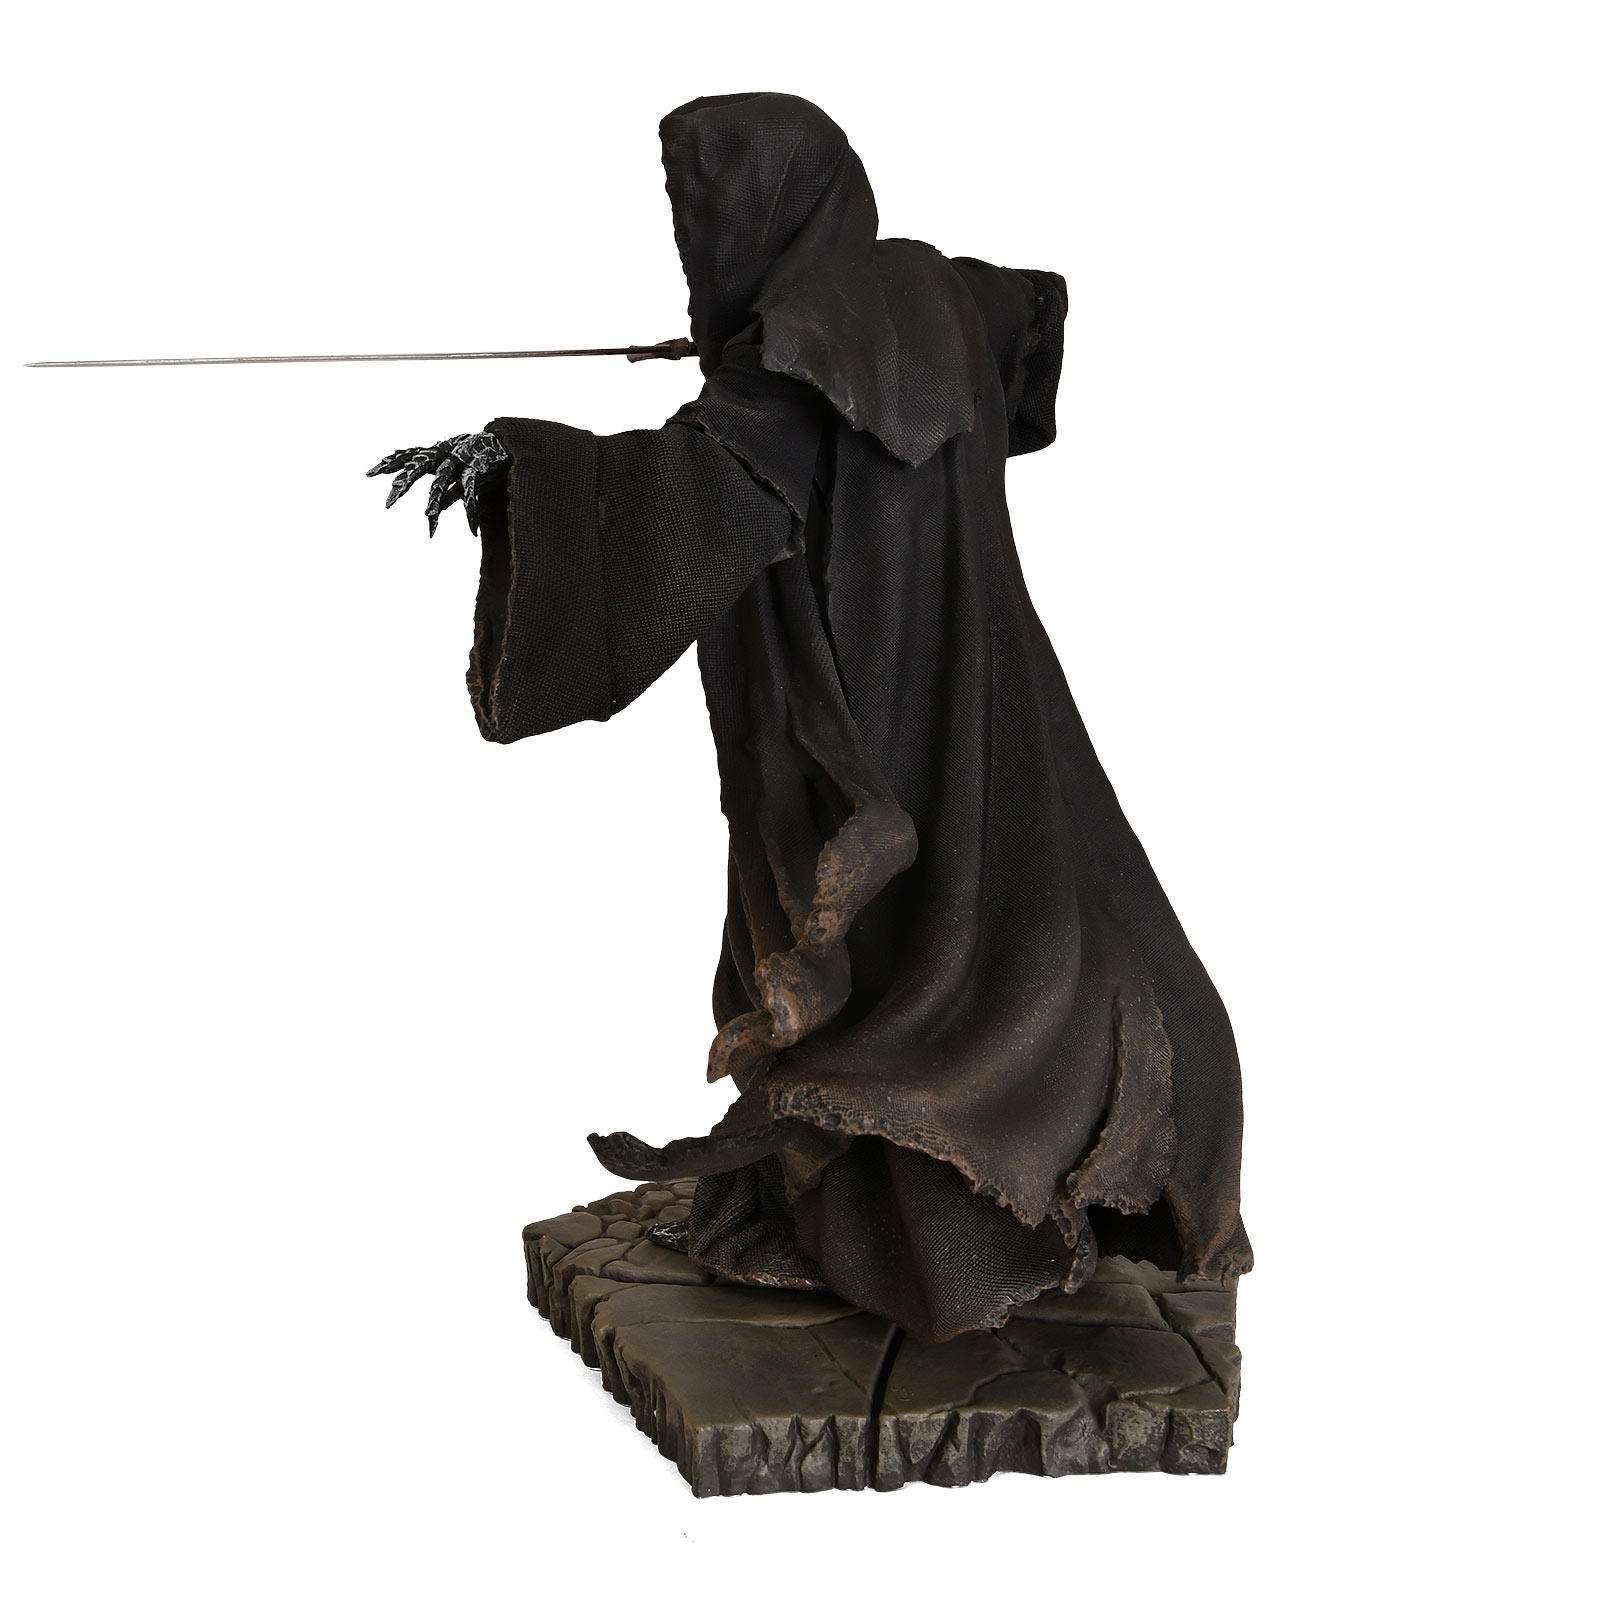 Herr der Ringe - Attacking Nazgul BDS Art Scale Deluxe Statue 22 cm